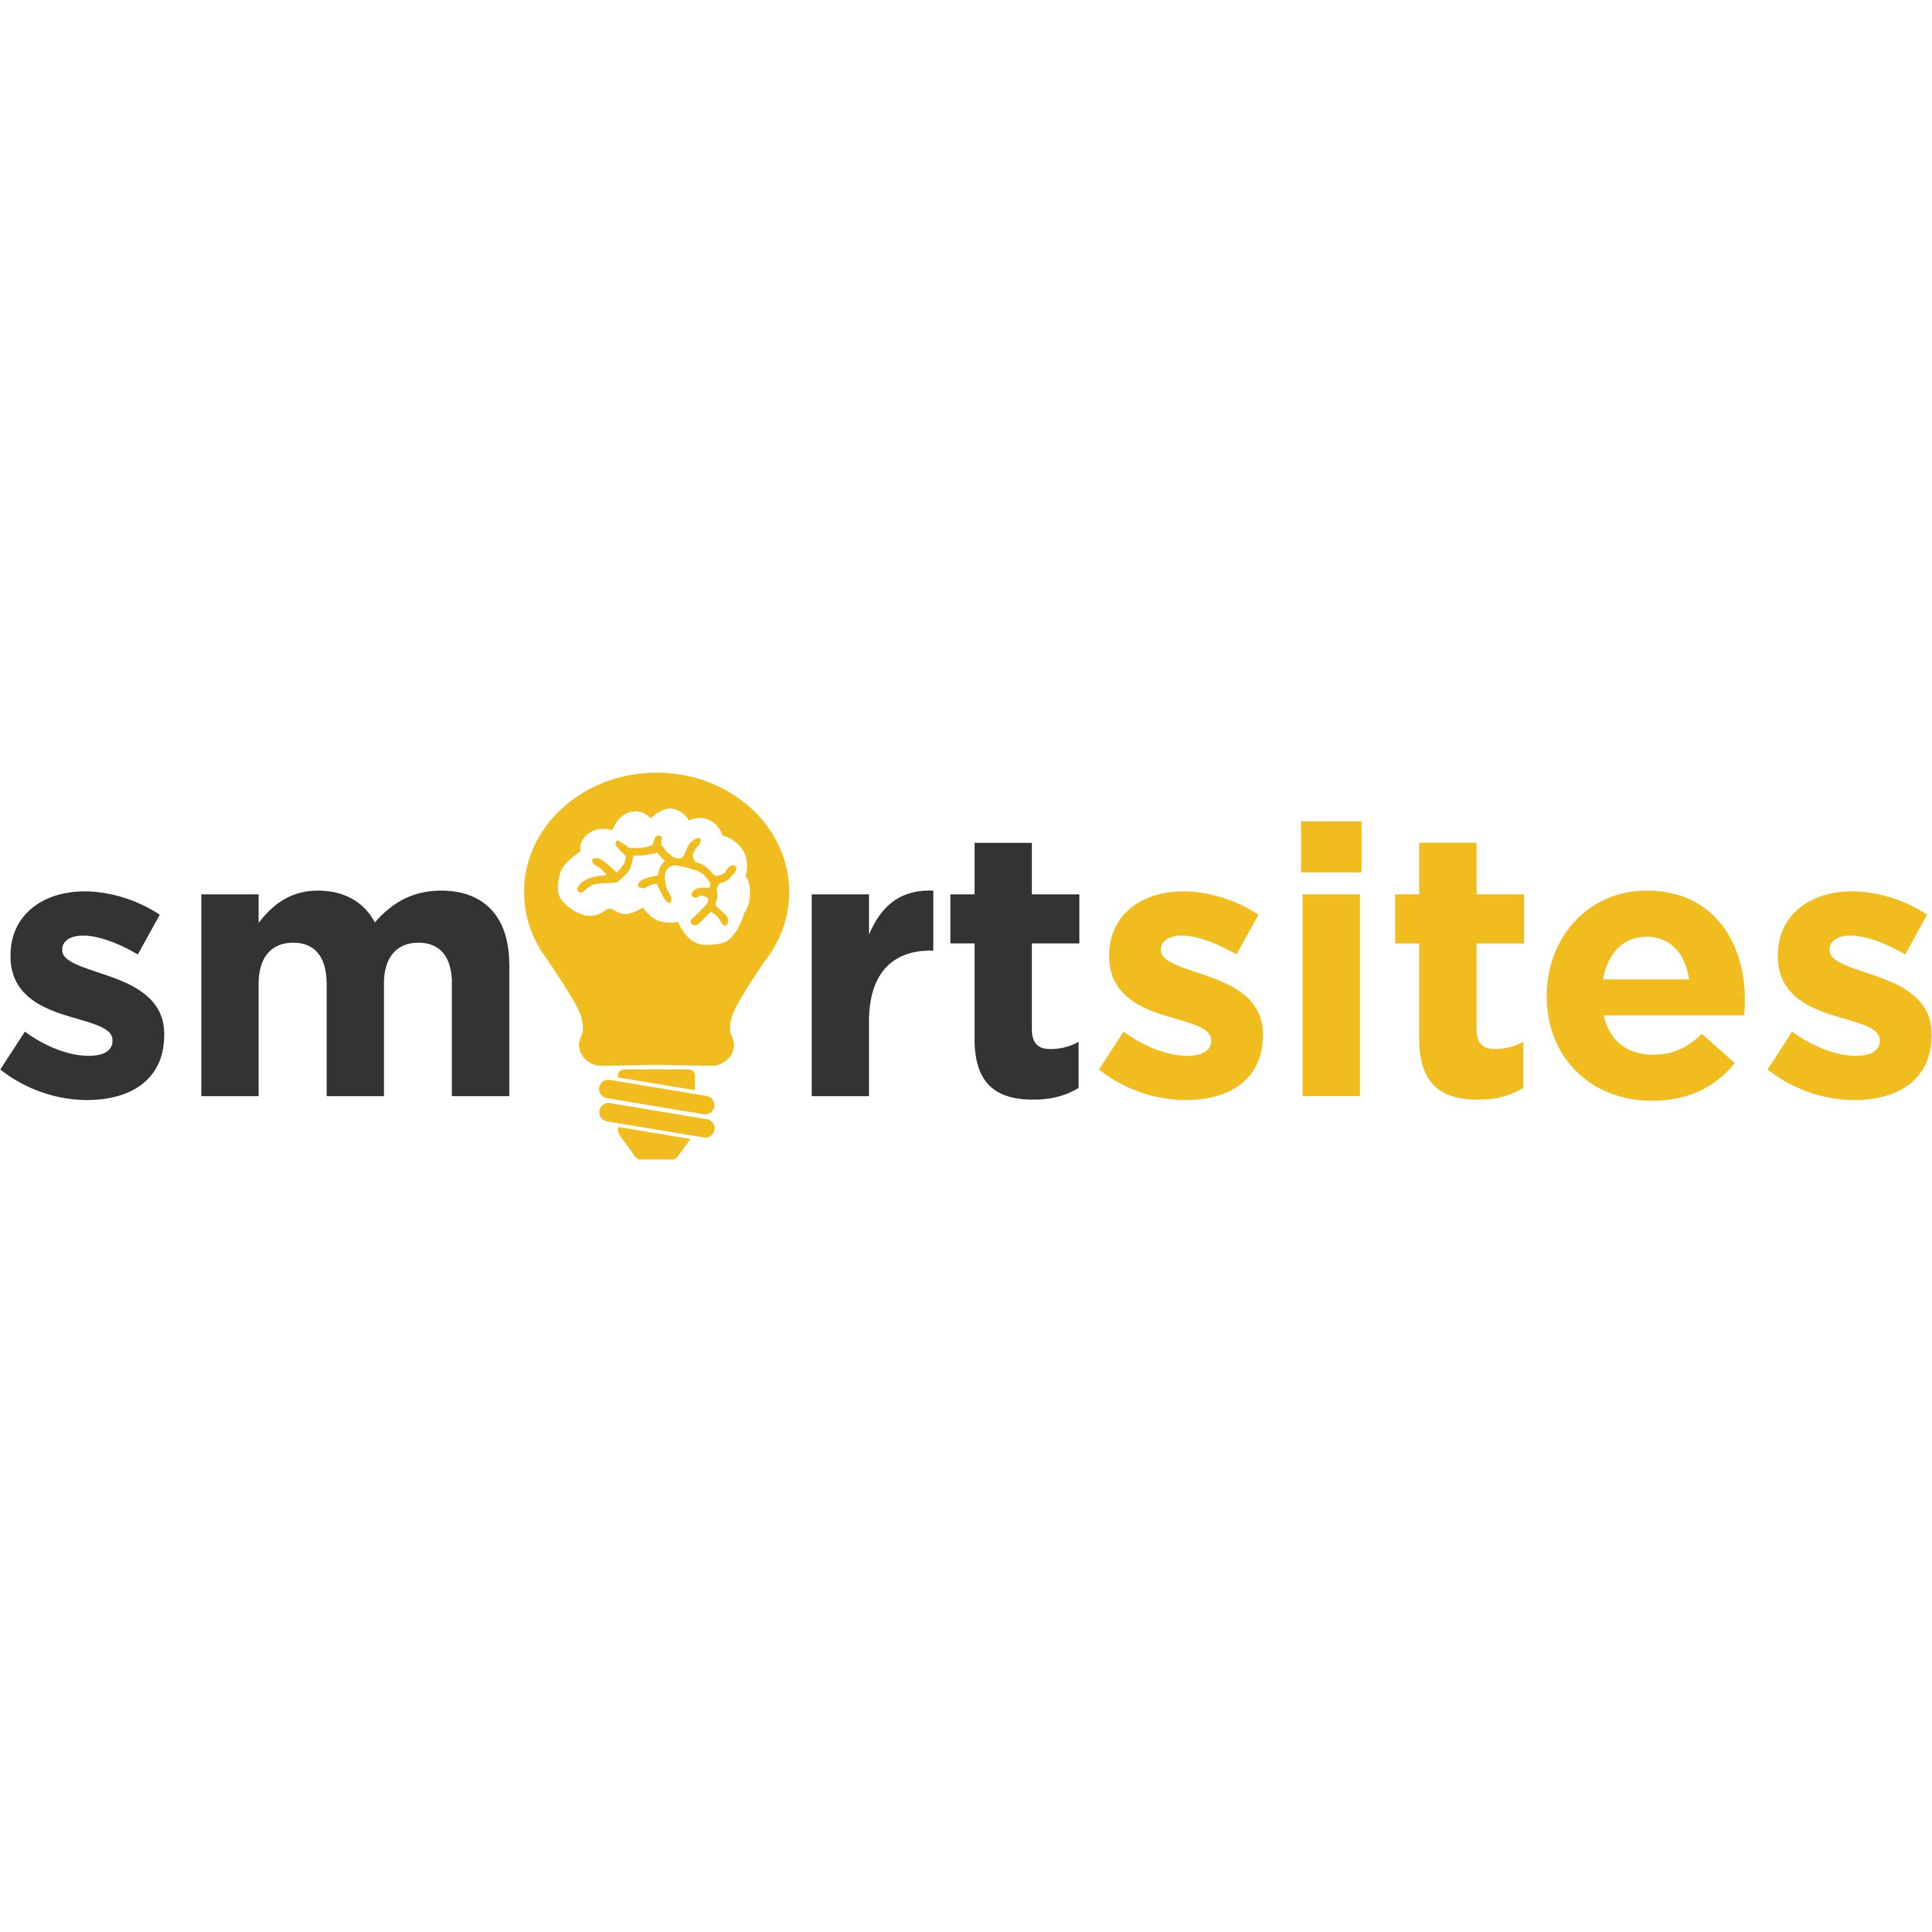 Top Online Marketing Company Logo: SmartSites